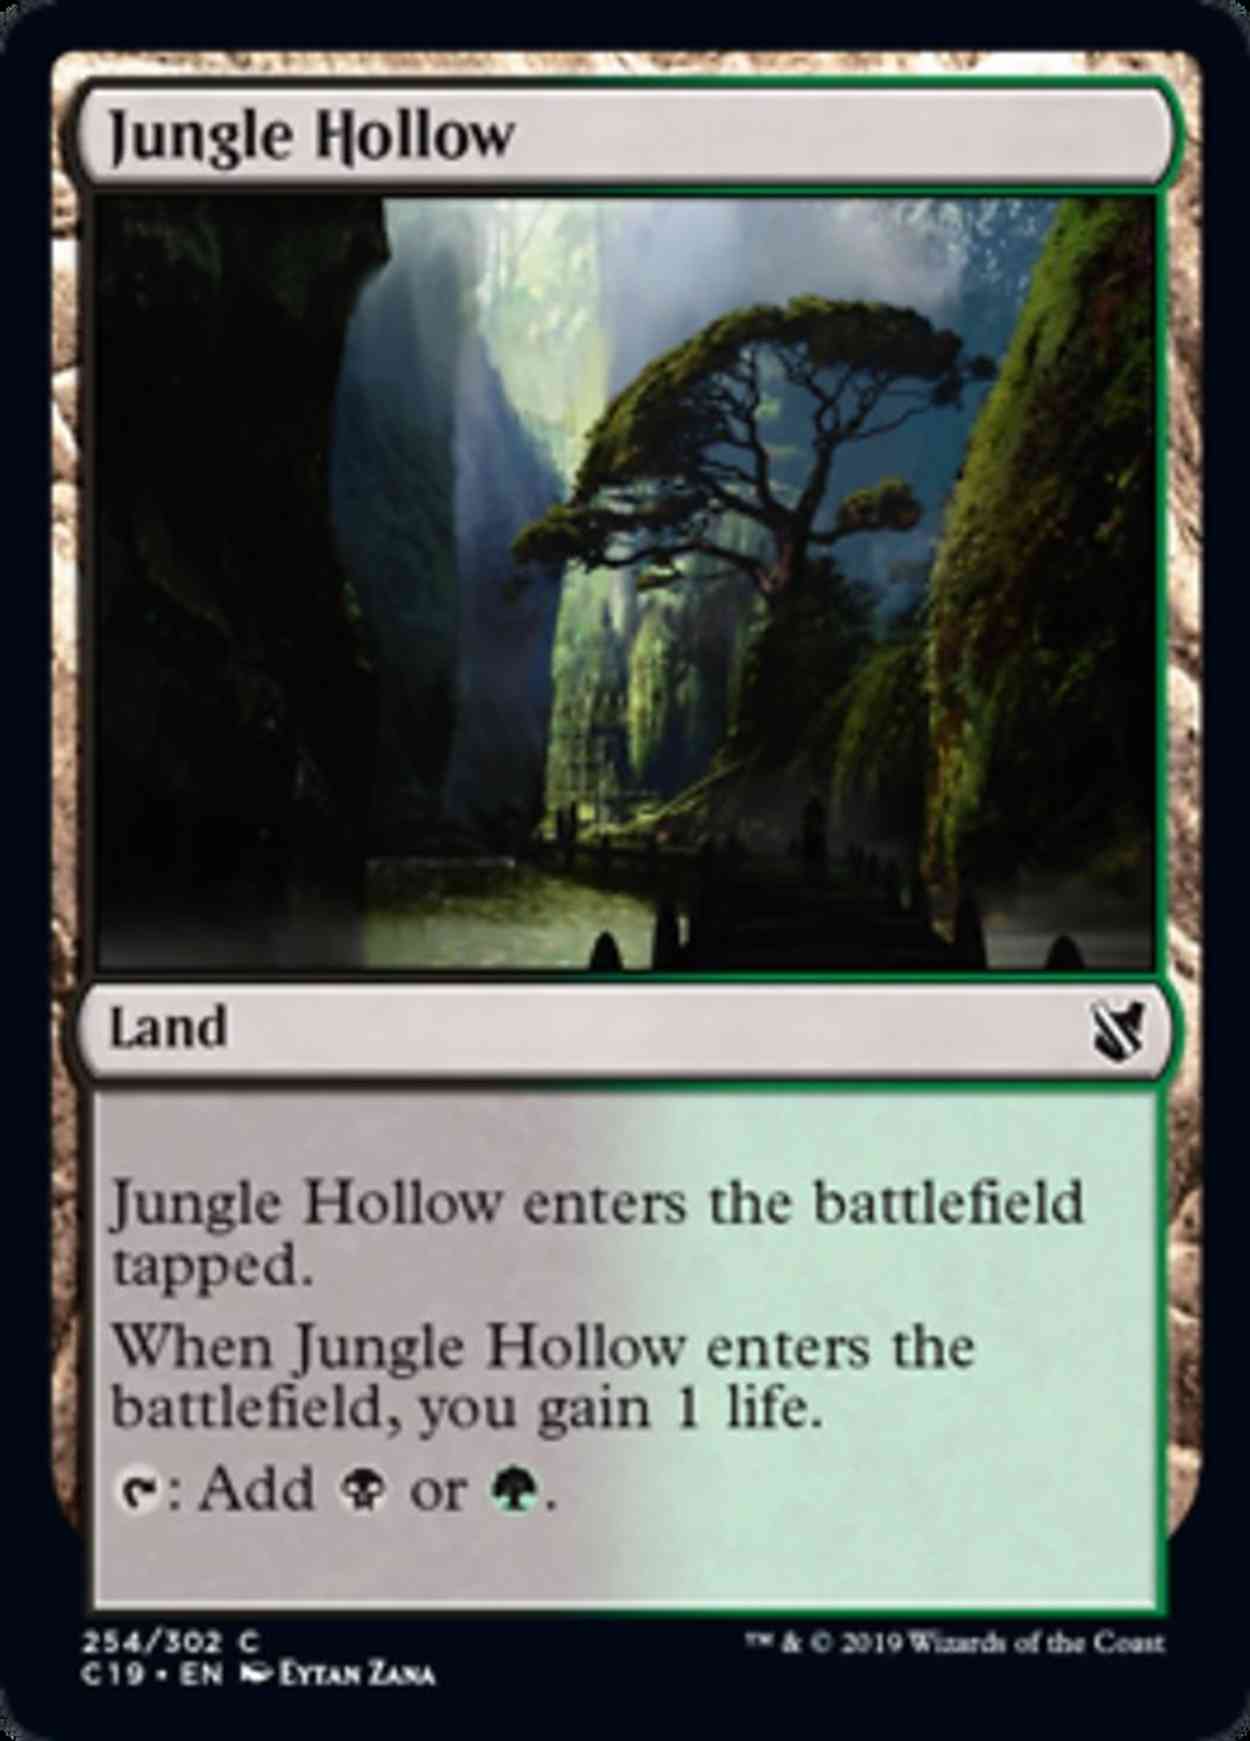 Jungle Hollow magic card front